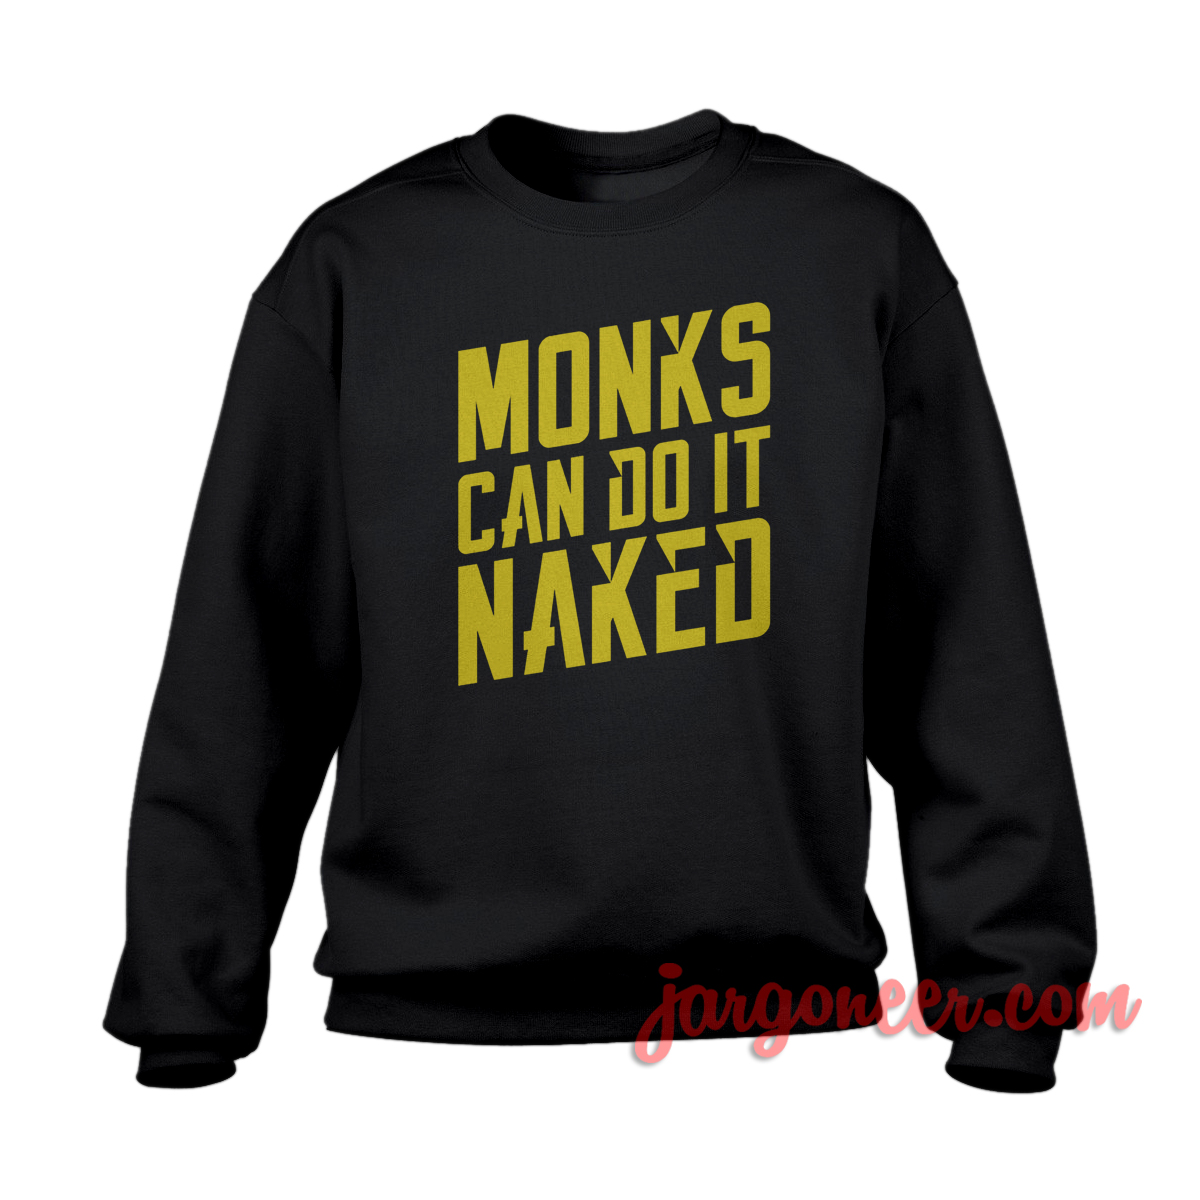 Monks Can Do It Naked - Shop Unique Graphic Cool Shirt Designs